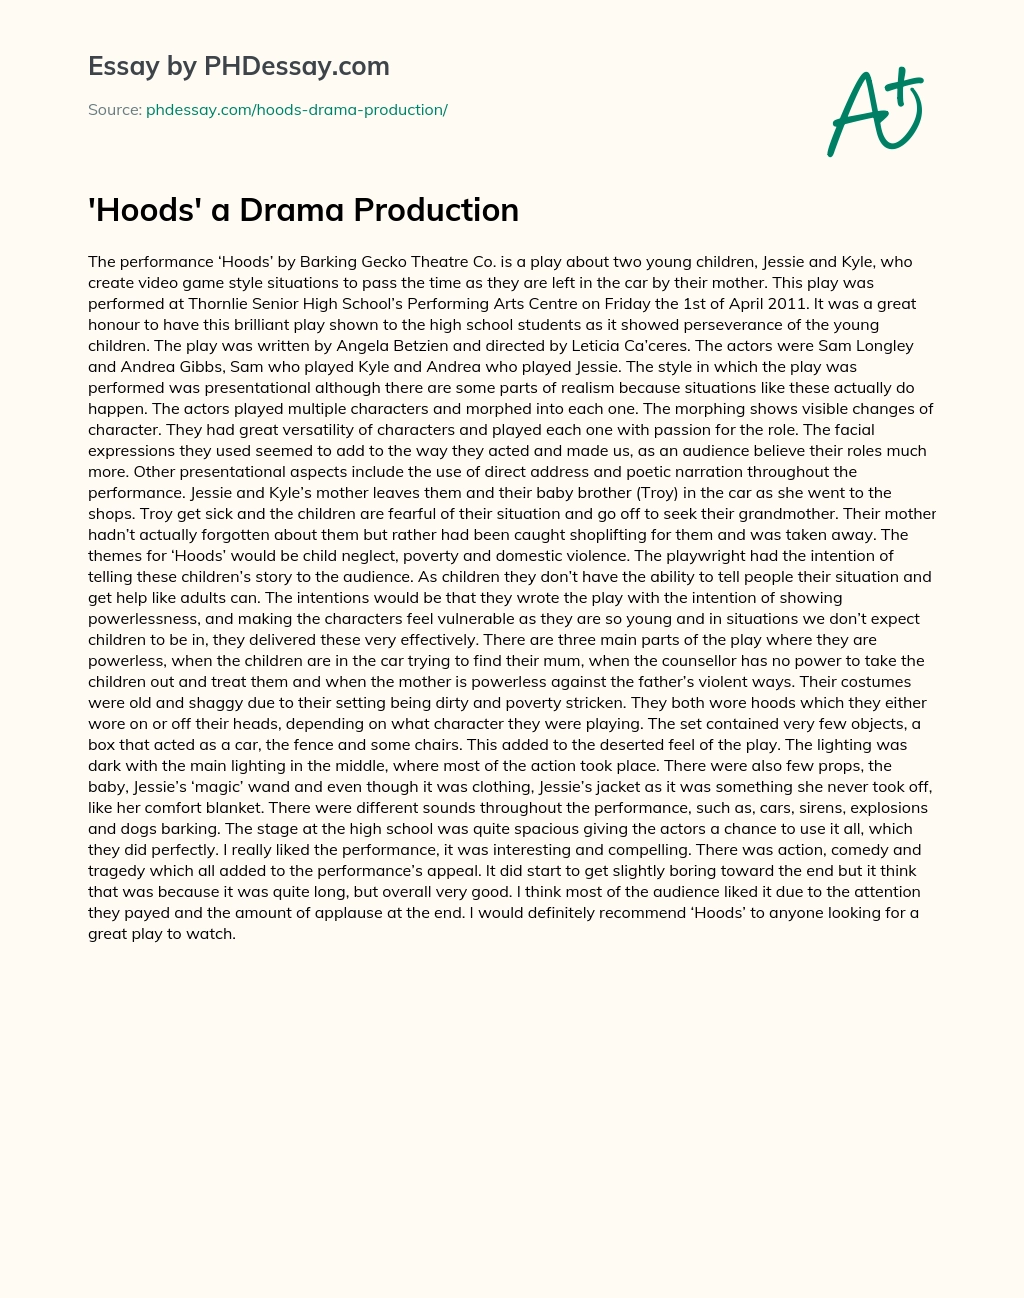 Hoods a Drama Production essay